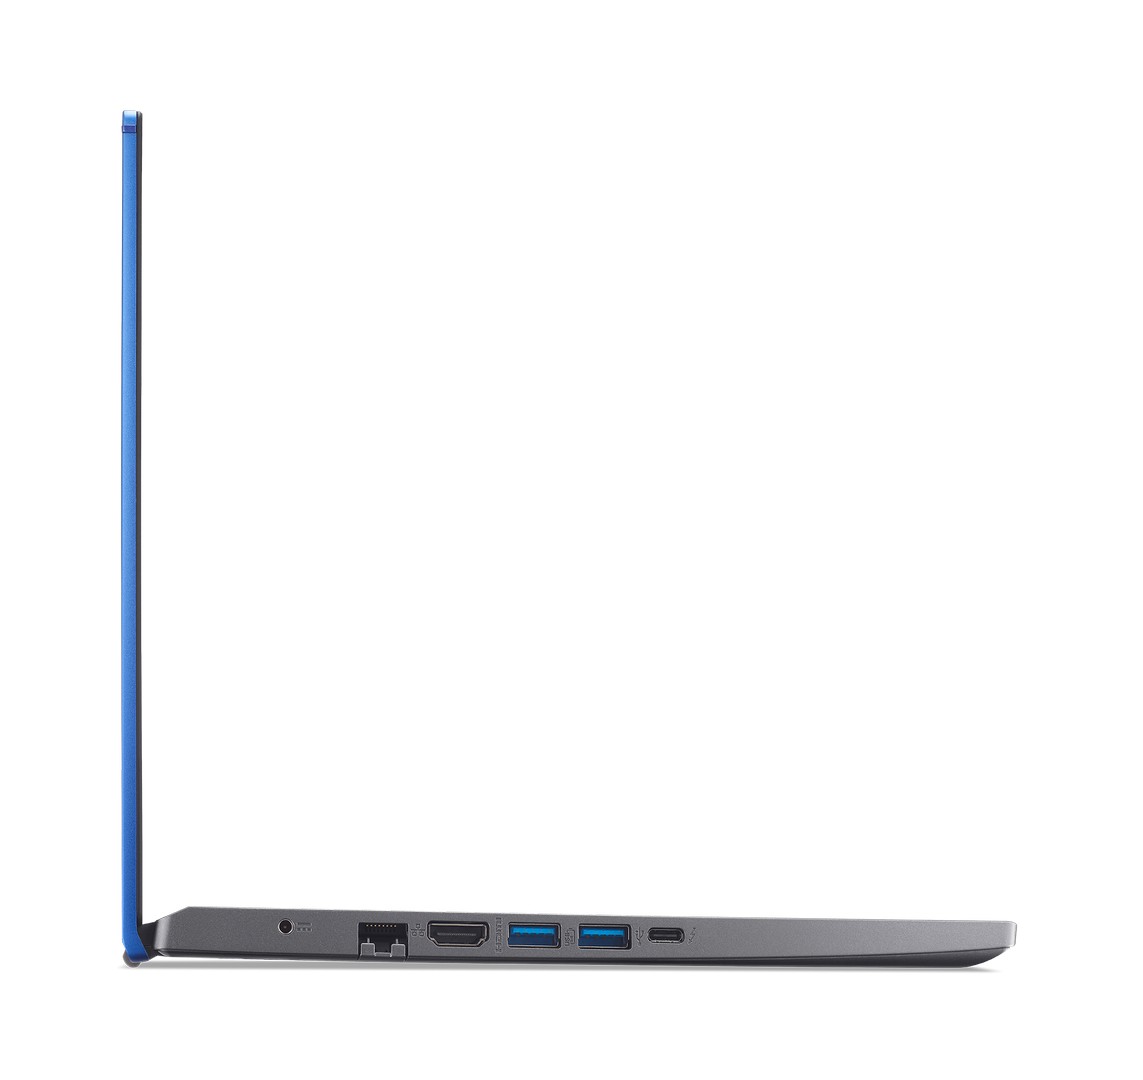 Acer Aspire 5 | A514-55-5103 Active Blue